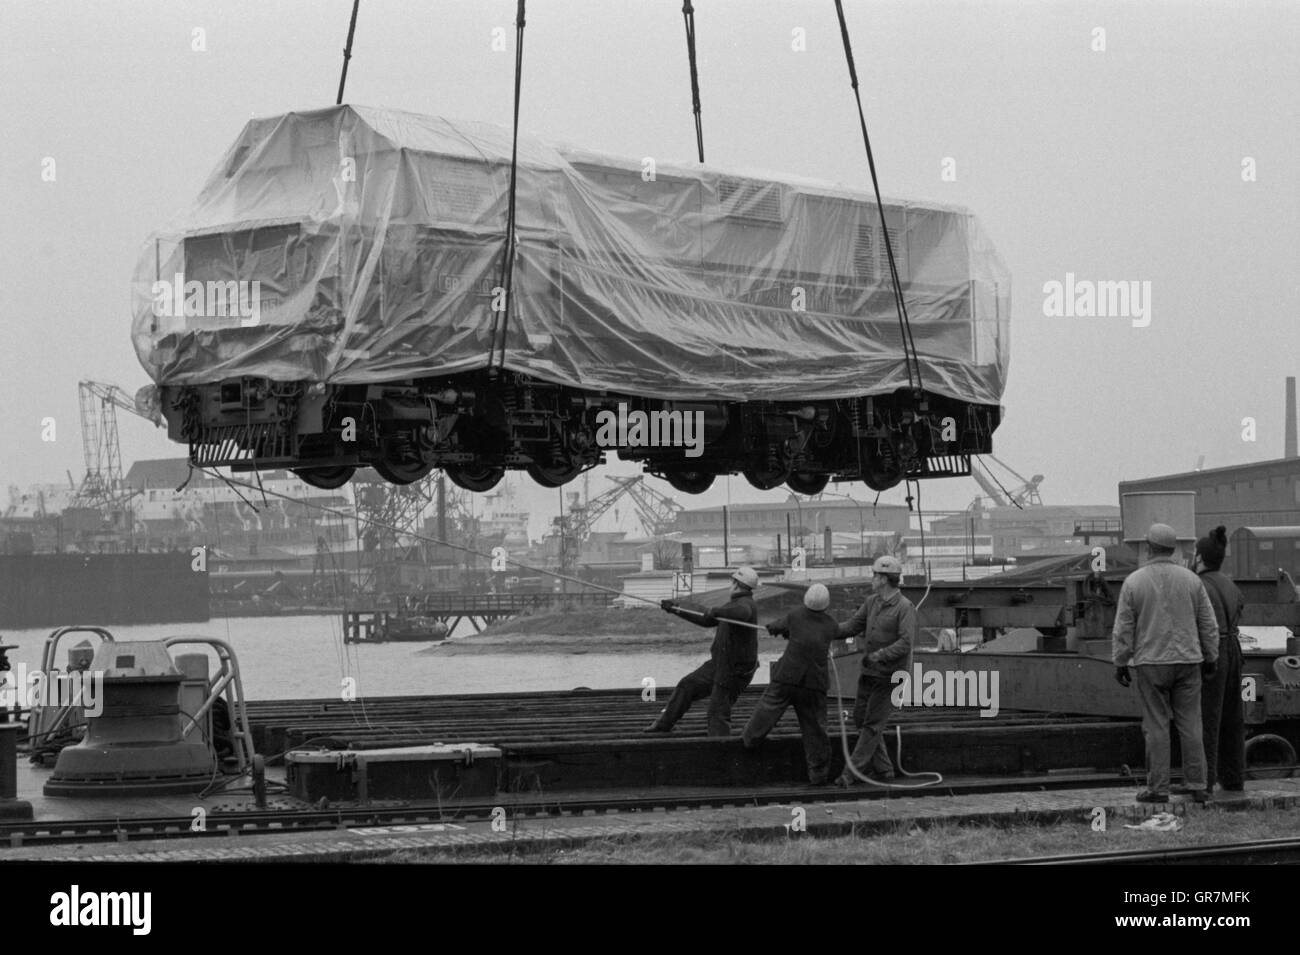 Embarque pesada locomotora 1973 BW Foto de stock